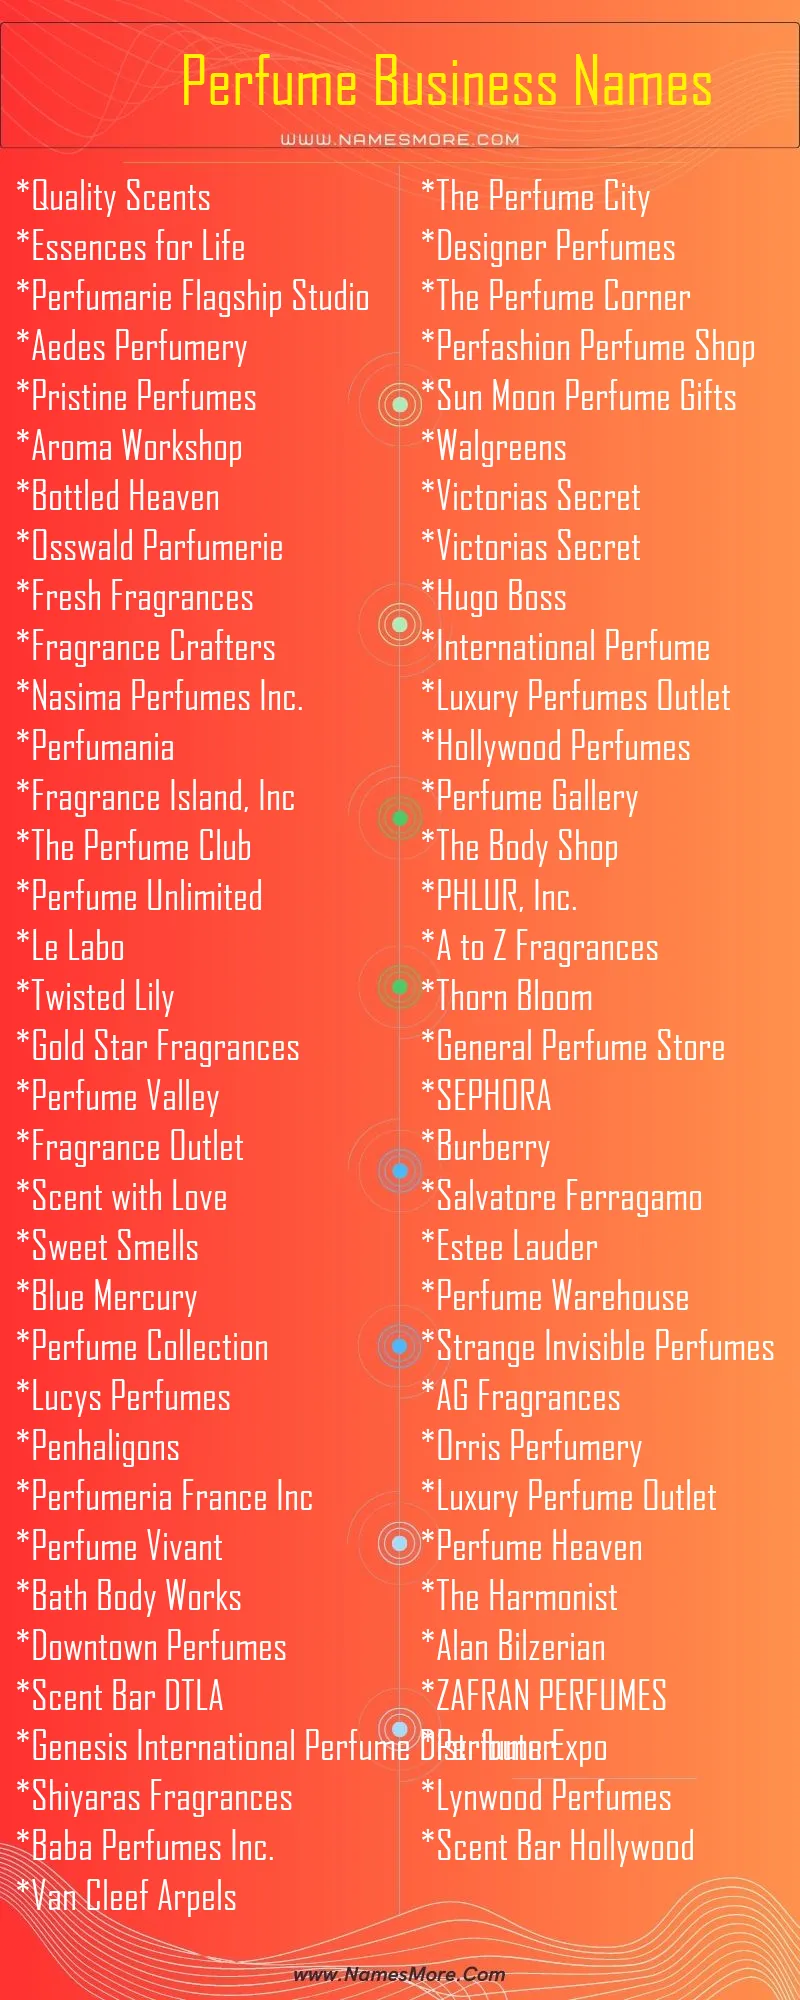 2600+ Perfume Business Names & Company Names List Infographic